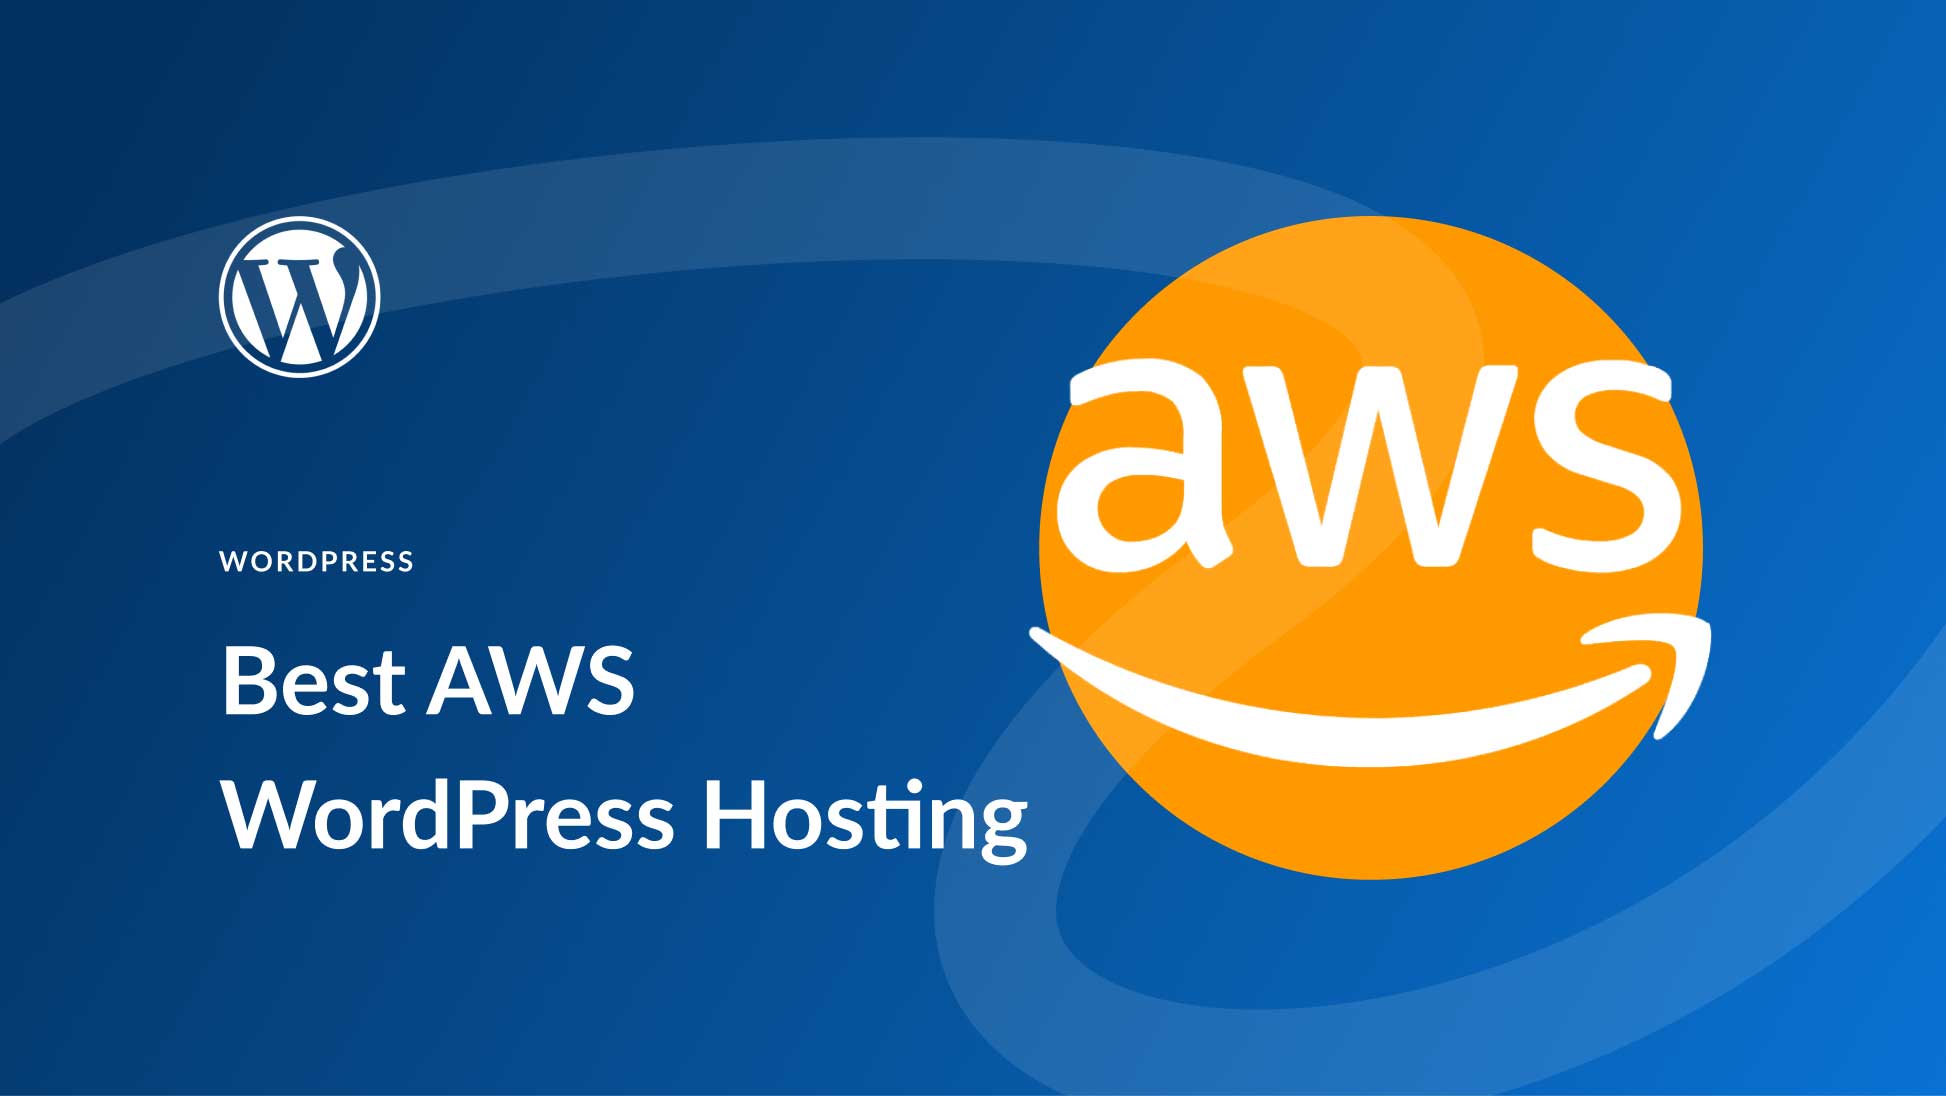 5 Best AWS WordPress Hosting Options in 2023